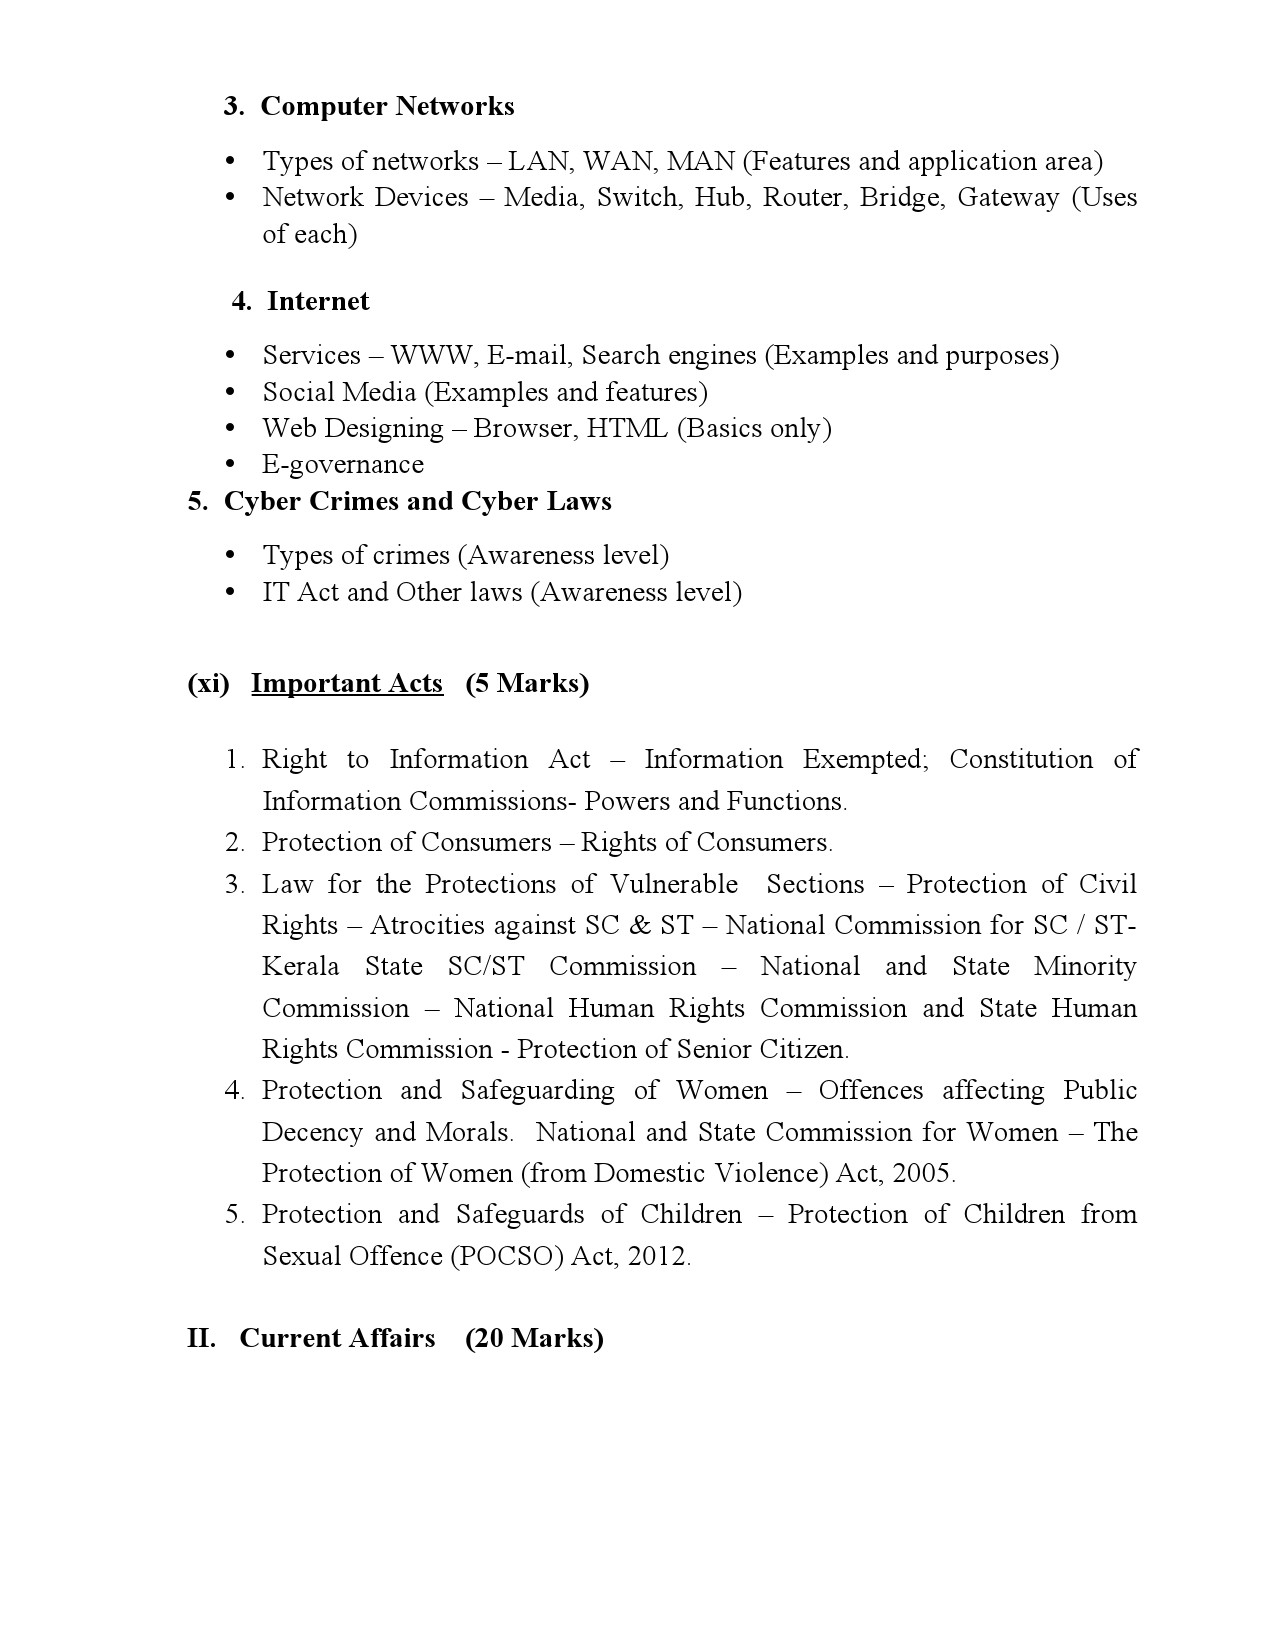 LDC Main Exam Syllabus Malayalam And English - Notification Image 20